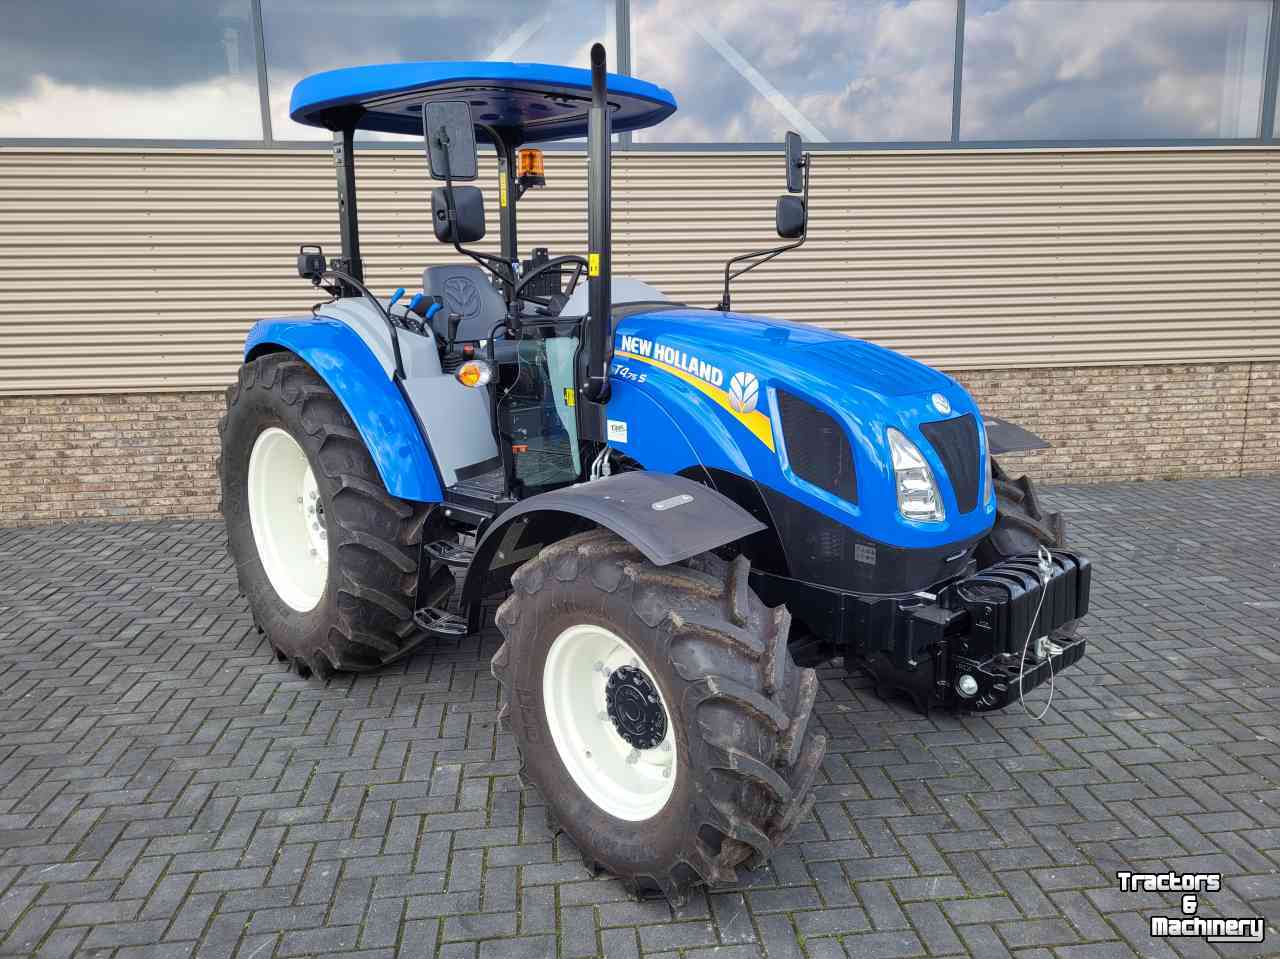 Schlepper / Traktoren New Holland t4.75